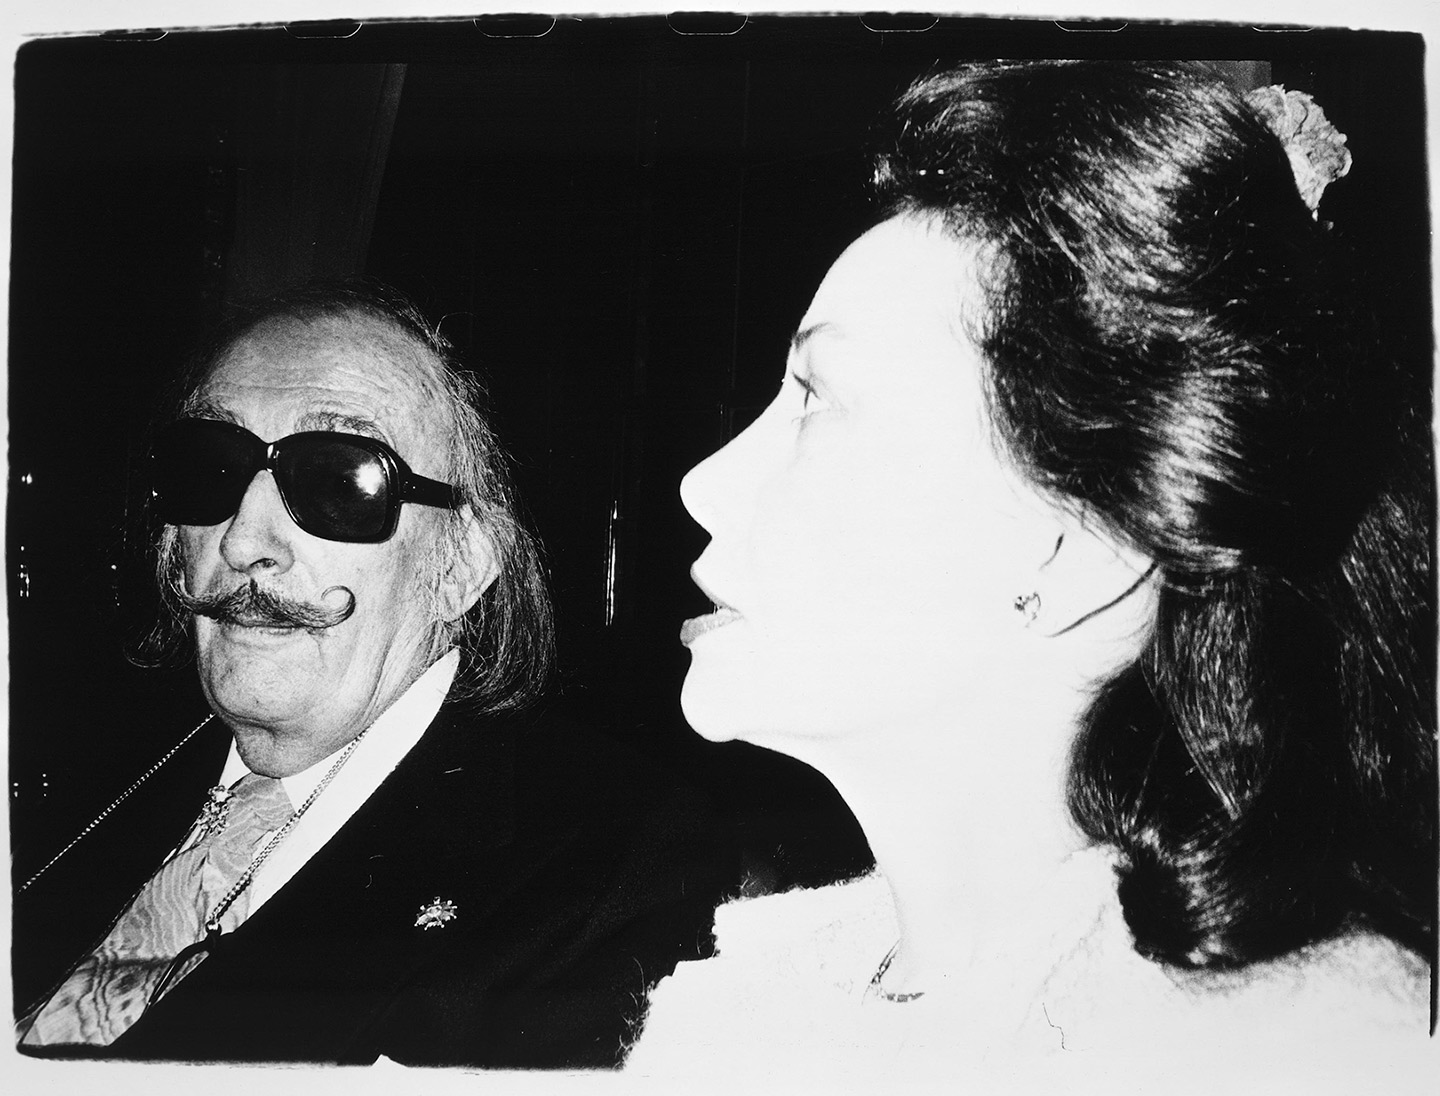 Andy Warhol photographs